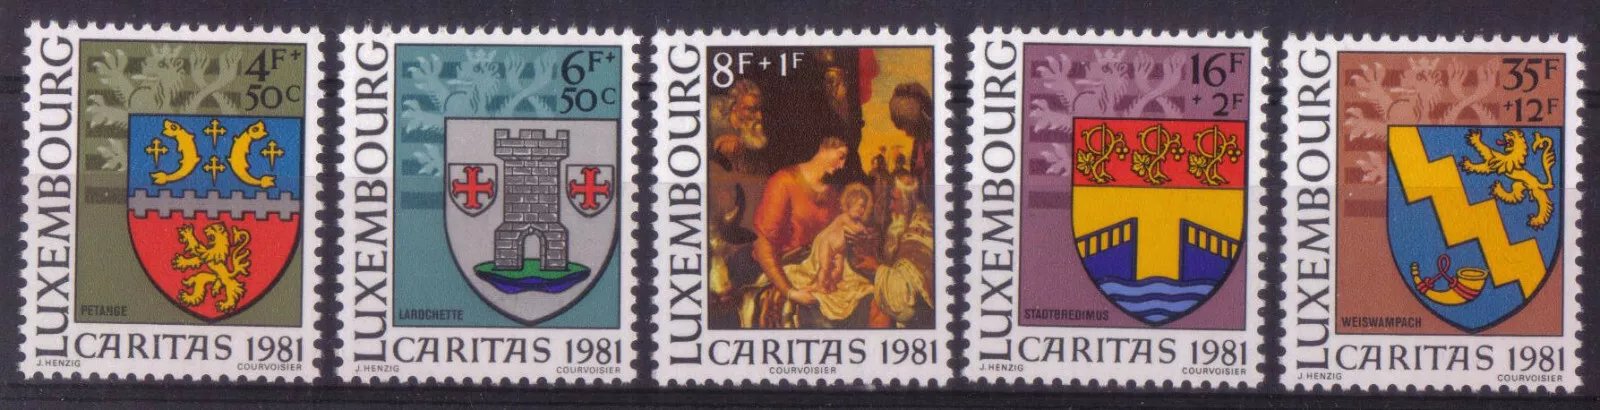 Luxemburg 1981 - Craciun, Caritas, steme, serie neuzata